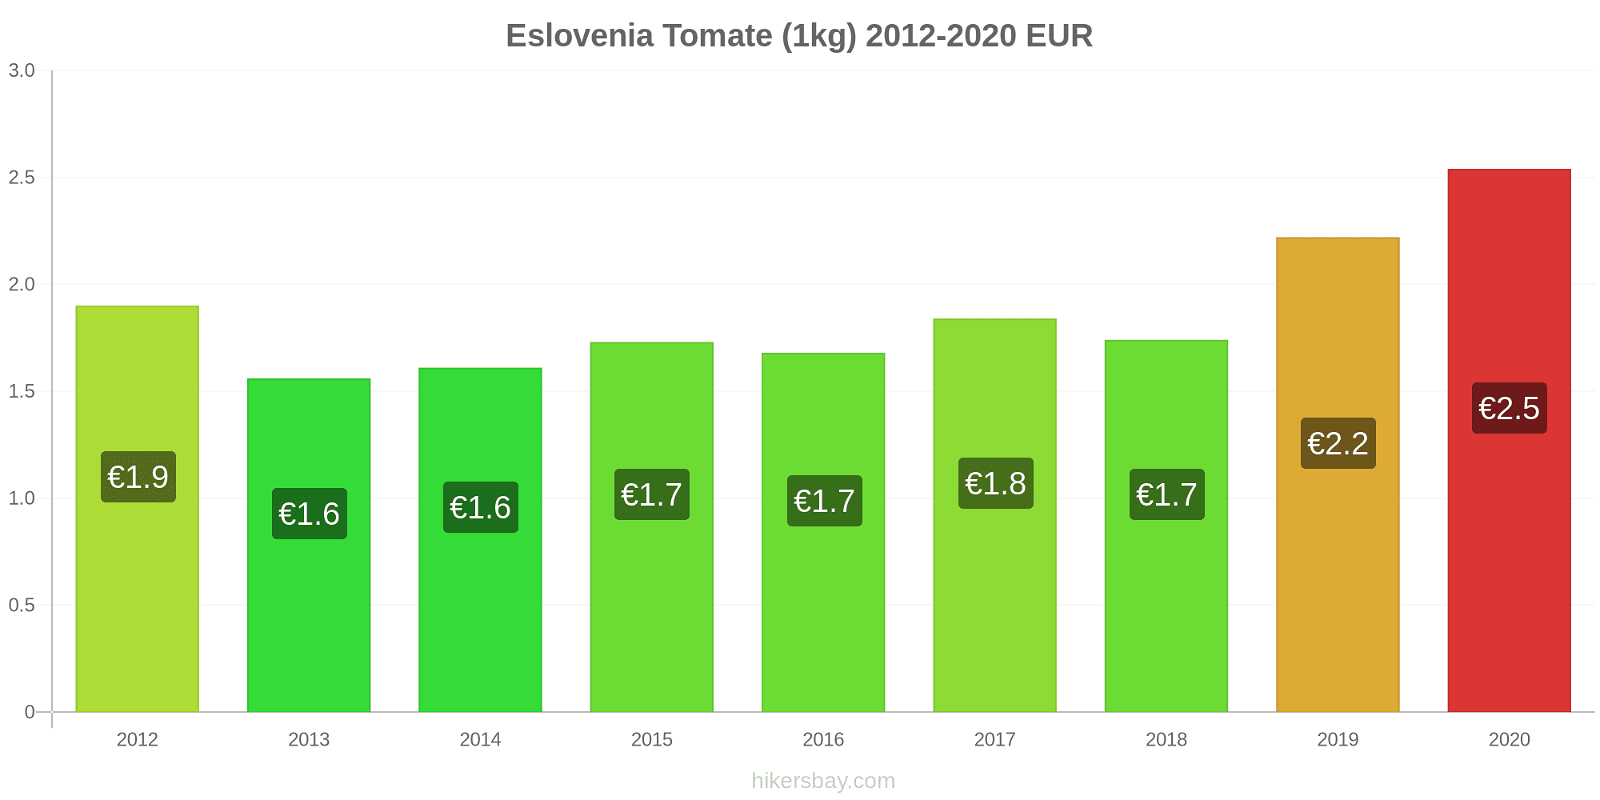 Eslovenia cambios de precios Tomate (1kg) hikersbay.com